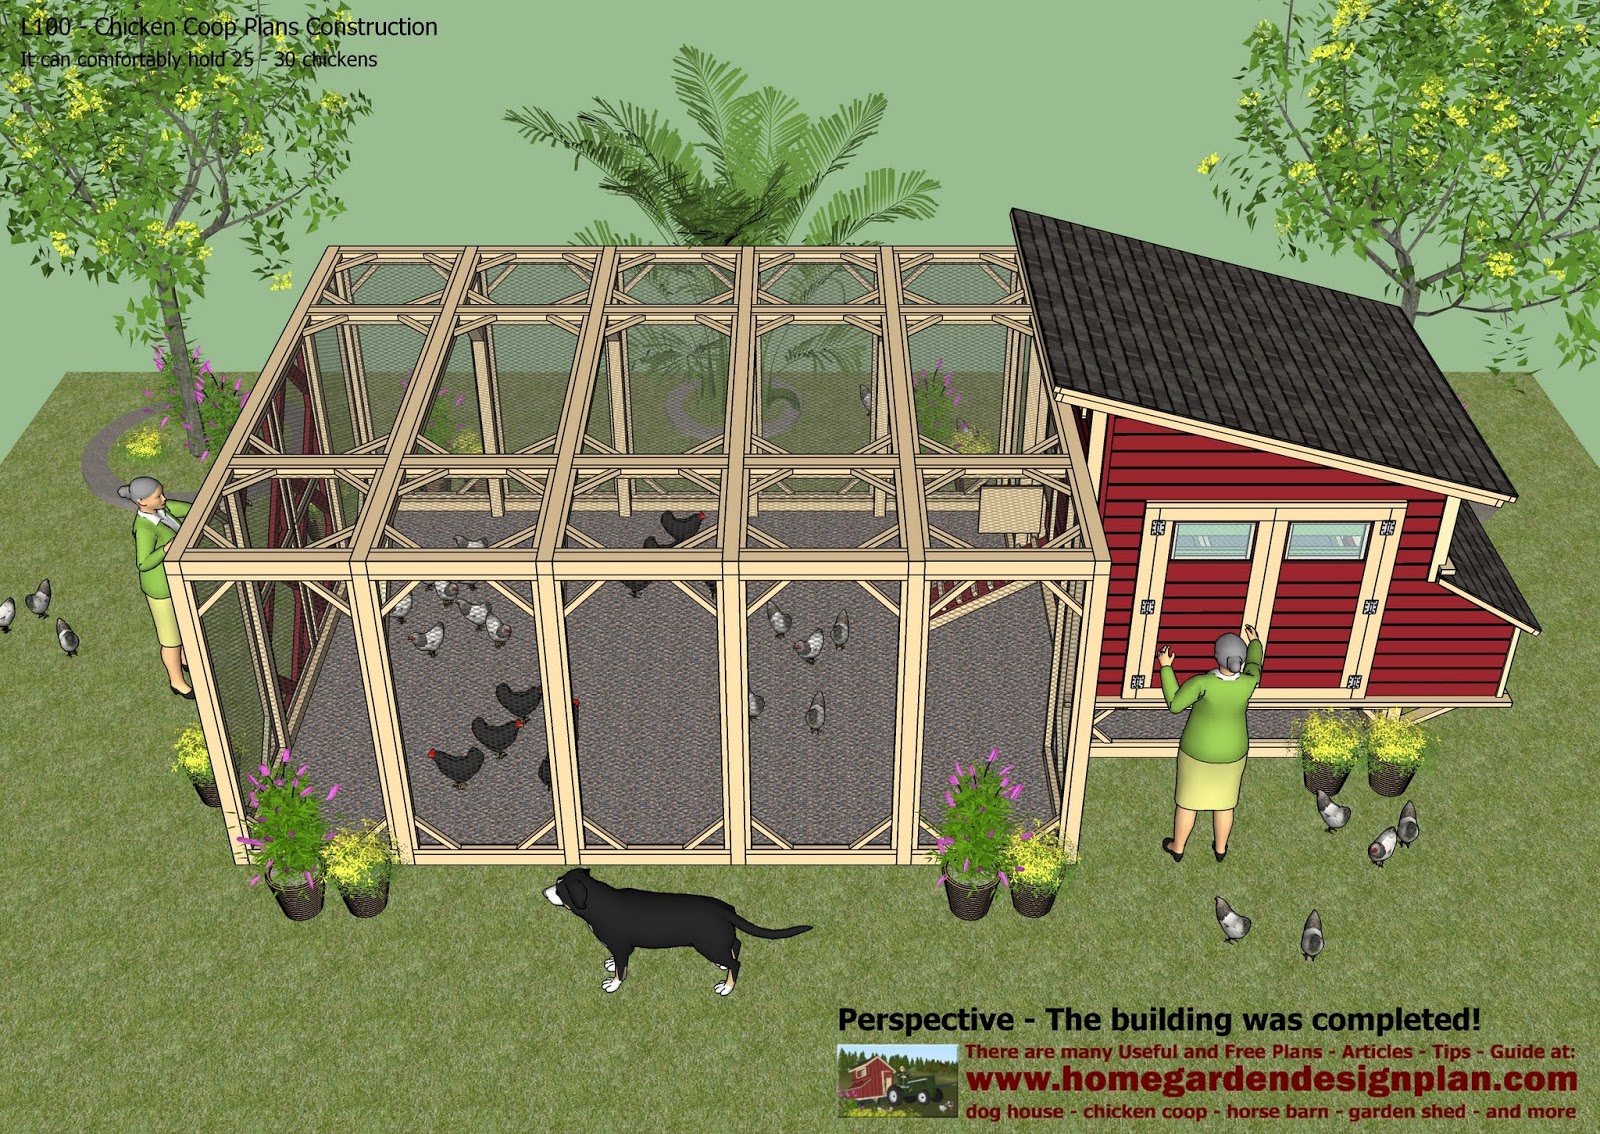 L100 - Chicken Coop Plans Construction - Chicken Coop Design - How To ...